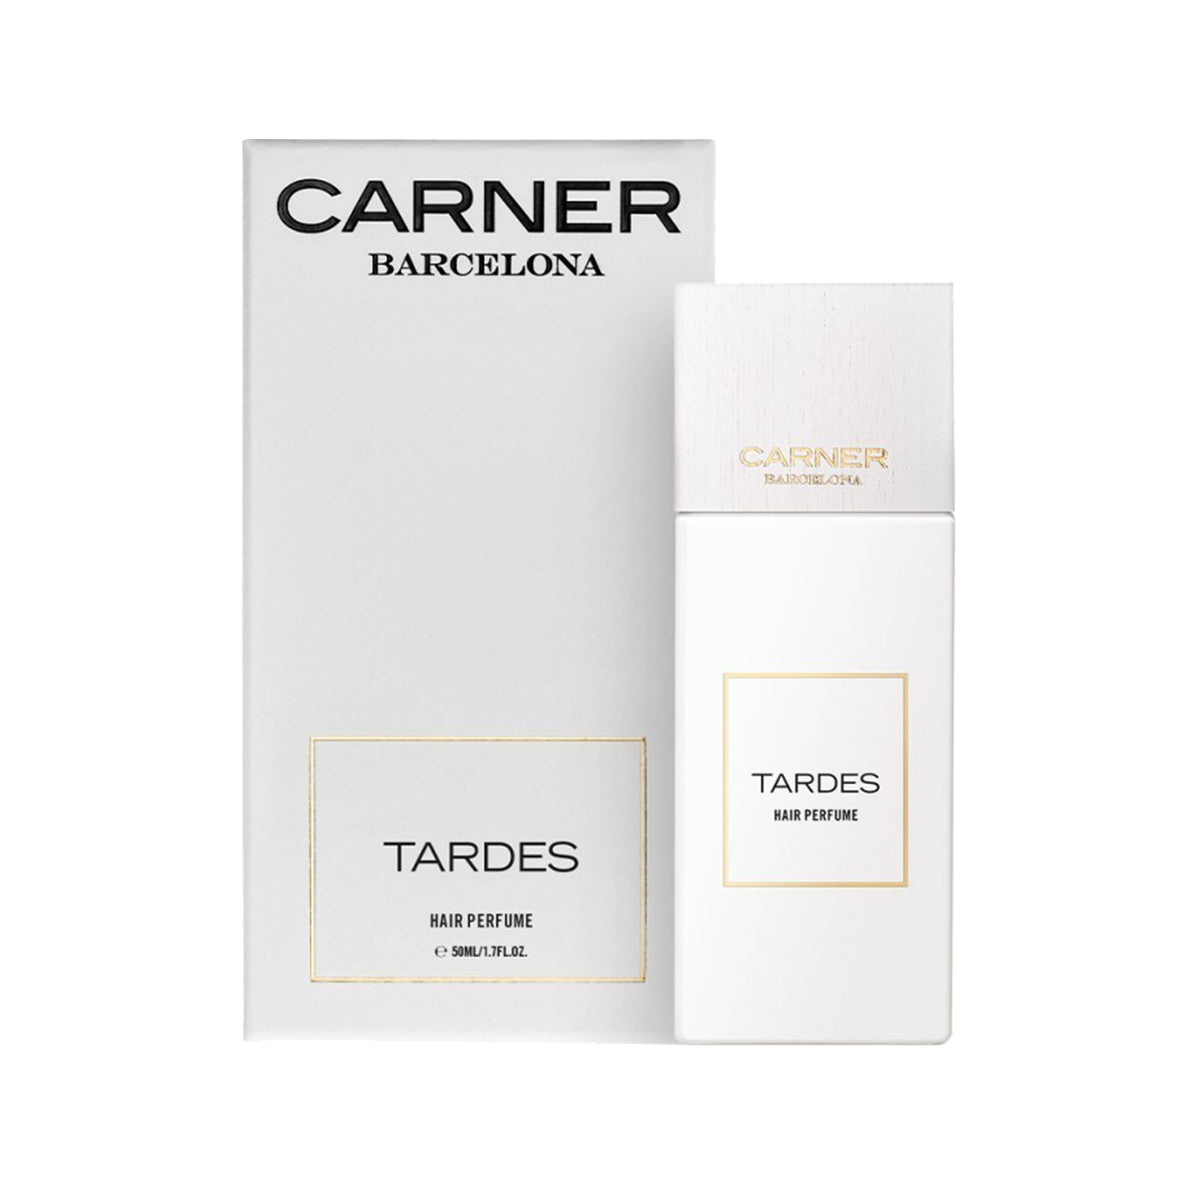 Tardes - Carner Barcelona - Hair Perfume 50ml